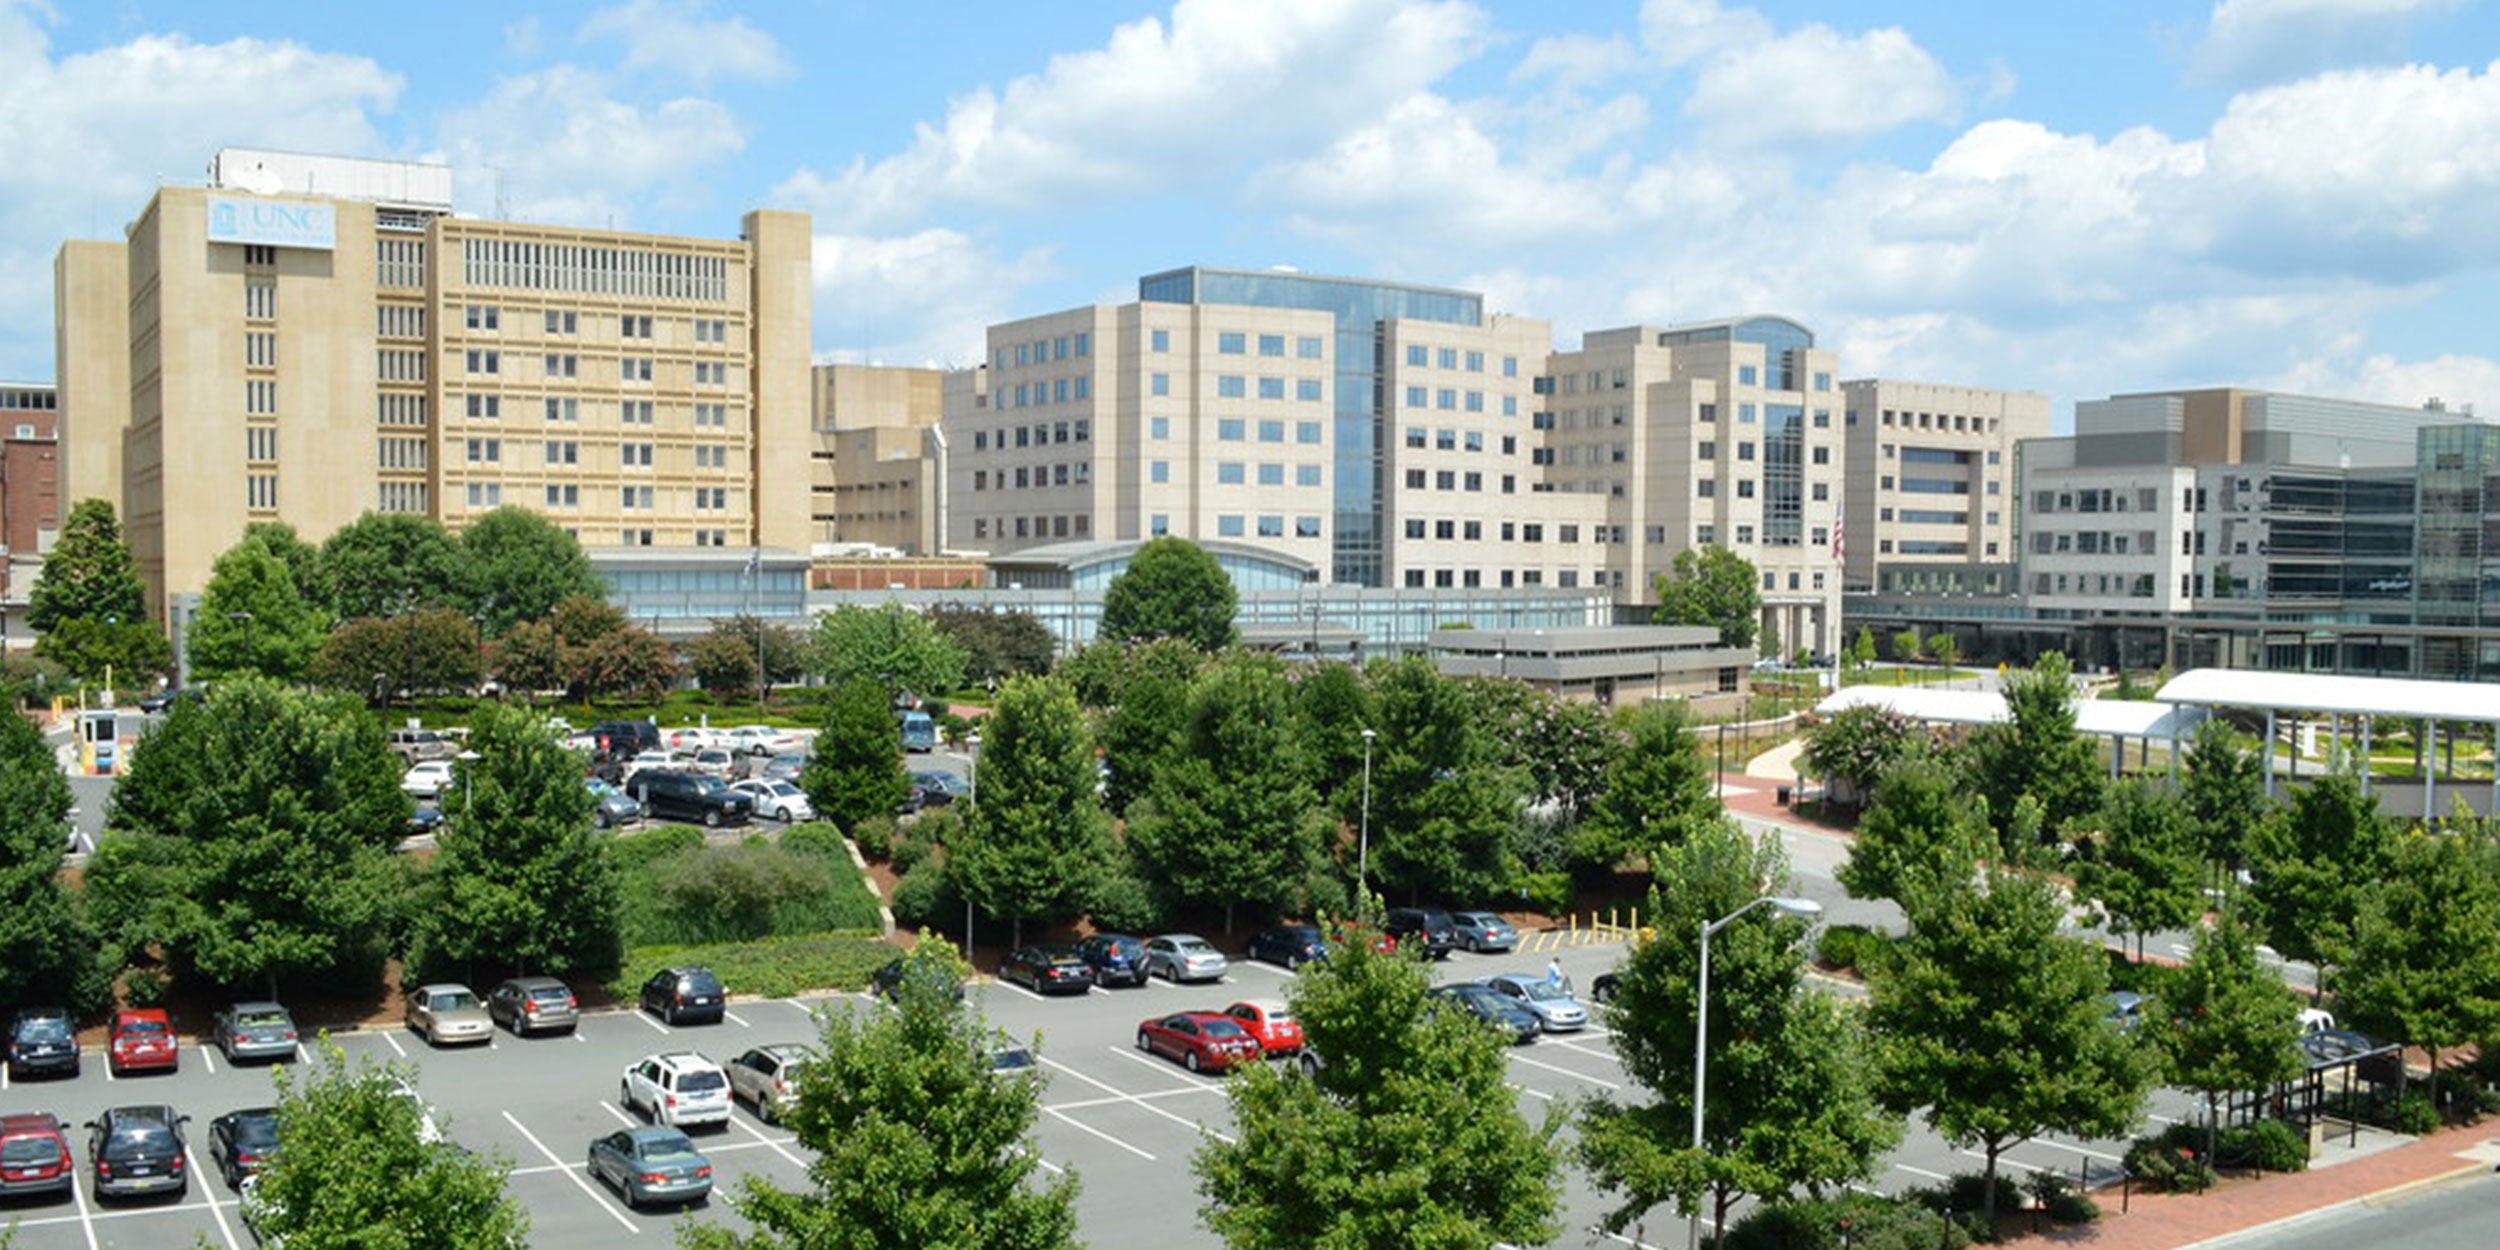 Exterior view of UNC Healthcare